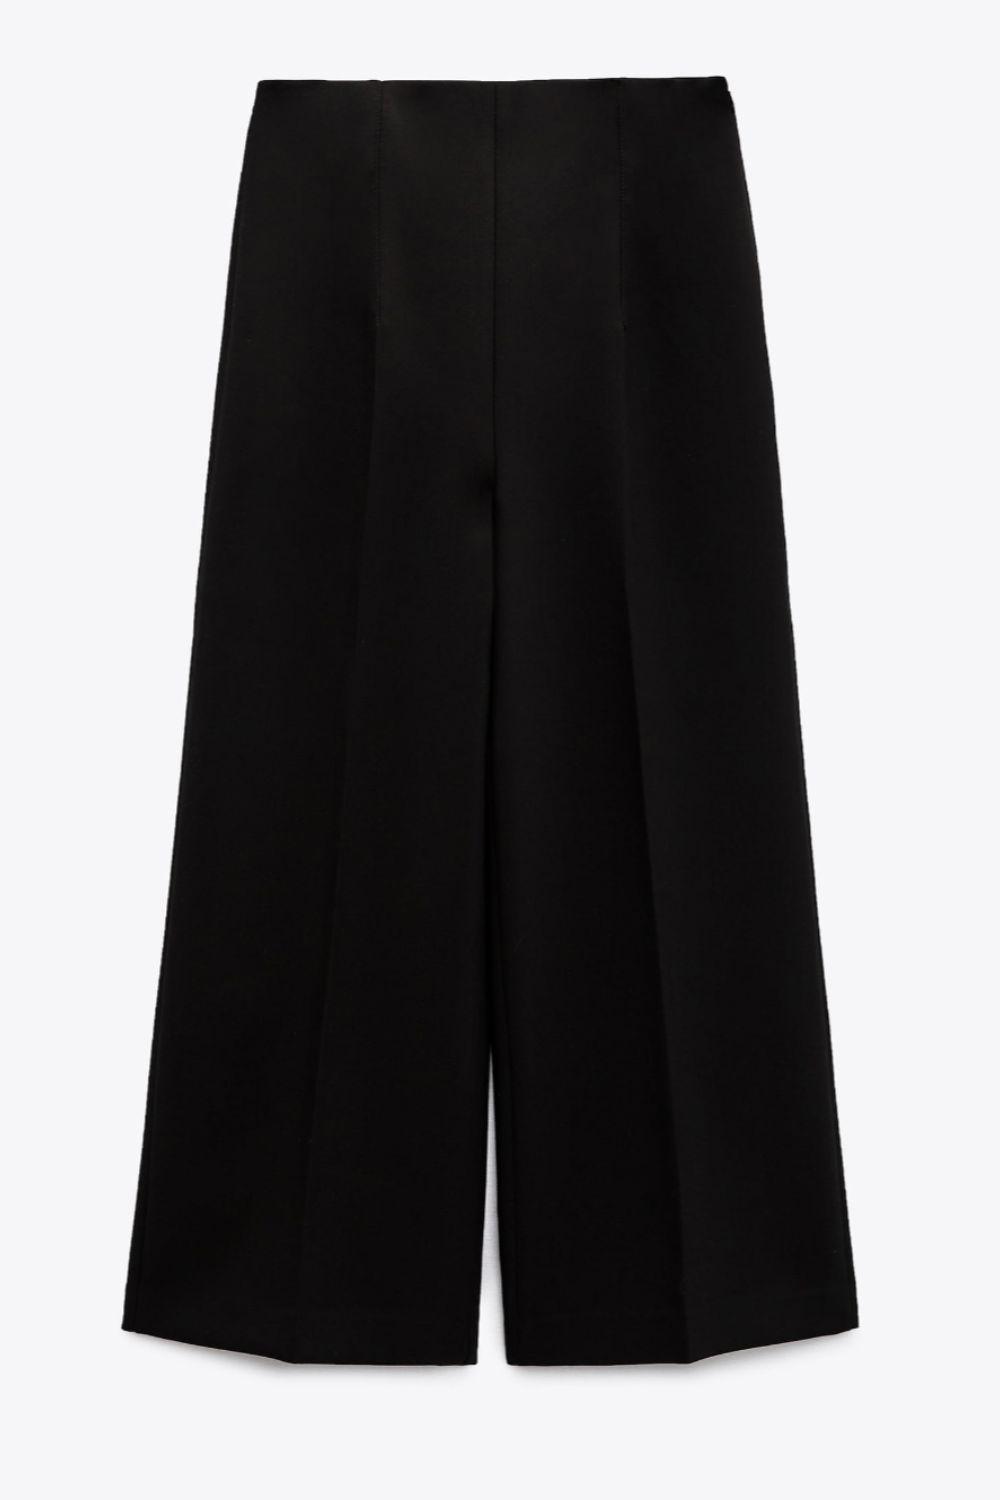 pantalones culotte negros 4